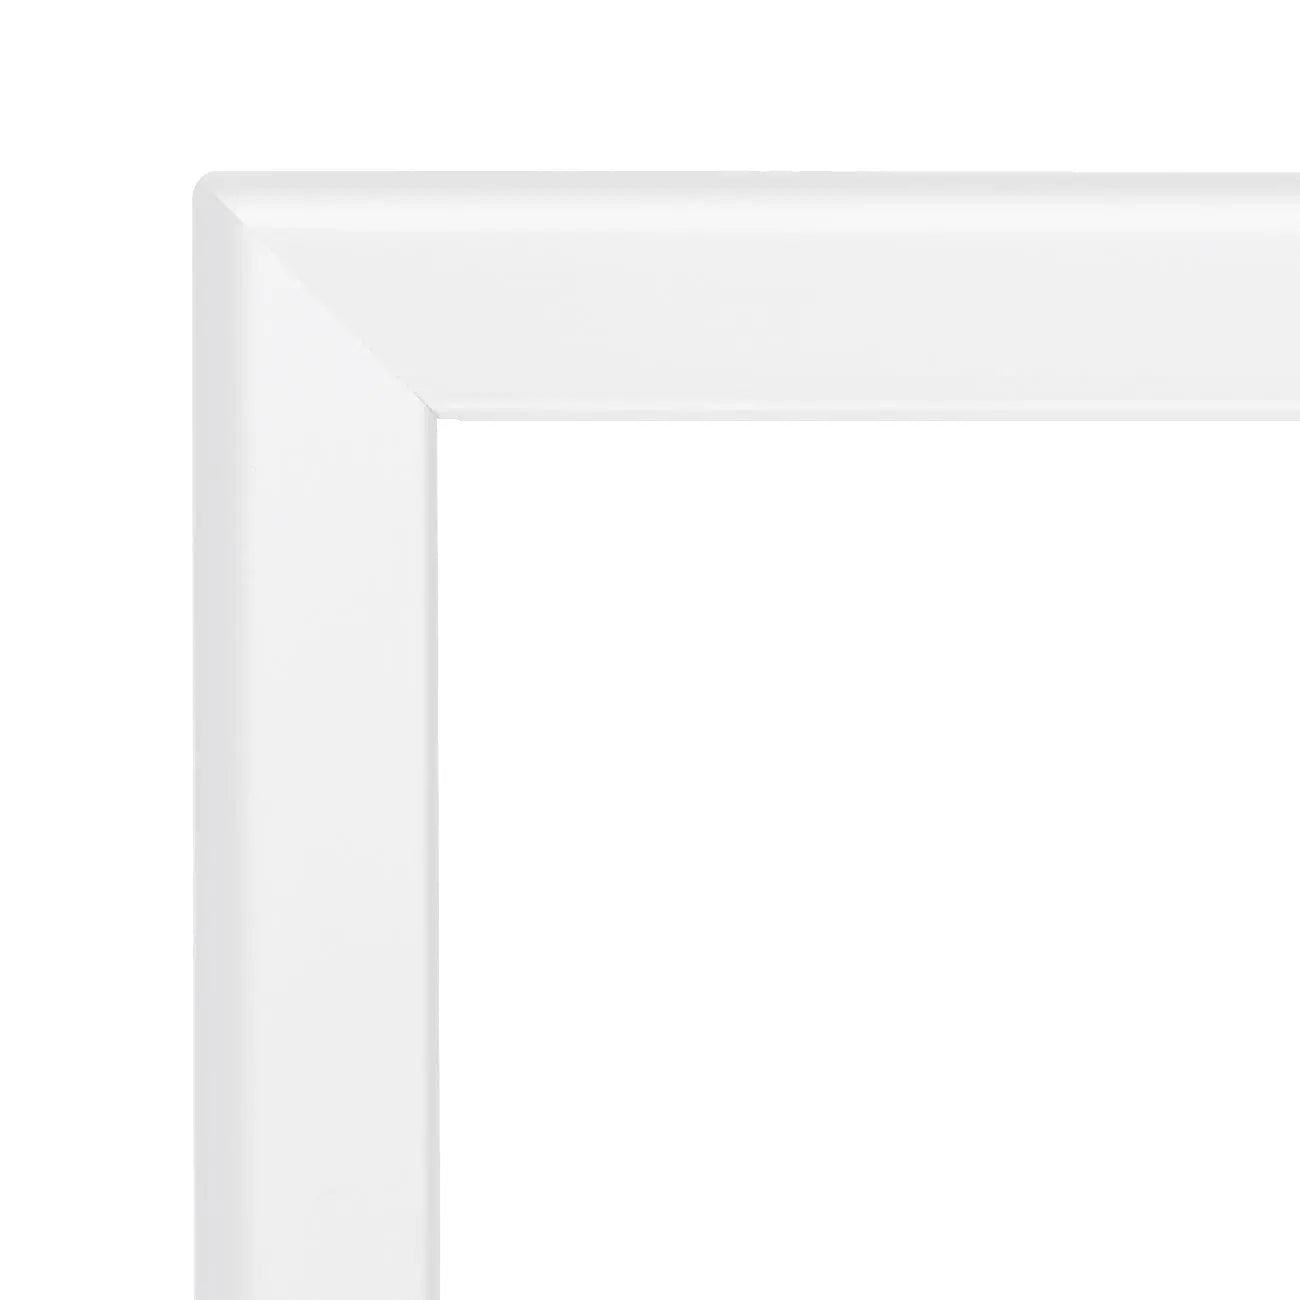 11x17 White SnapeZo® Snap Frame - 1.25" Profile - Snap Frames Direct